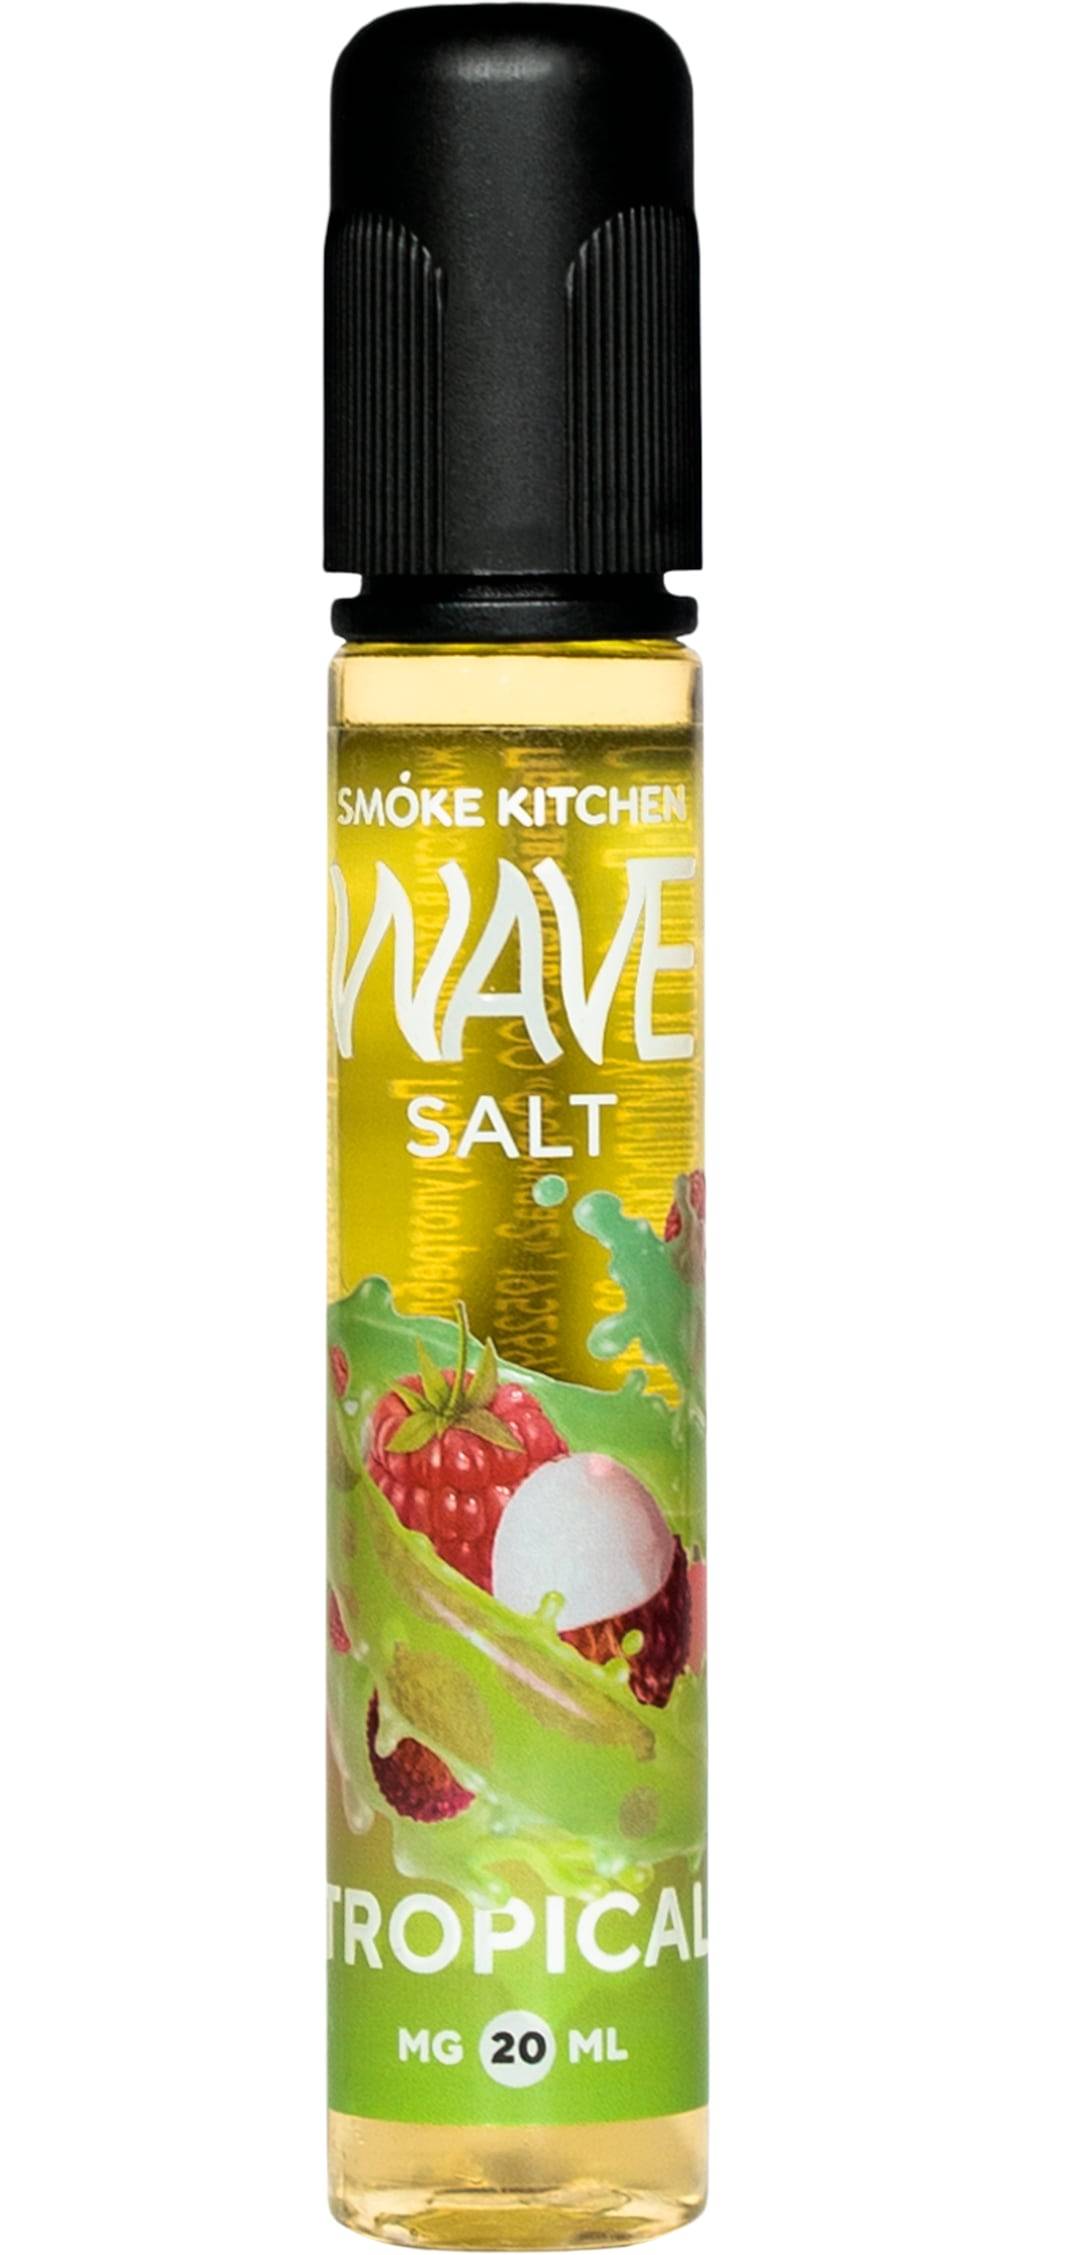  Жидкость SMOKE KITCHEN Wave Salt 30ml Tropical 2% от МосТАБАК ОПТ